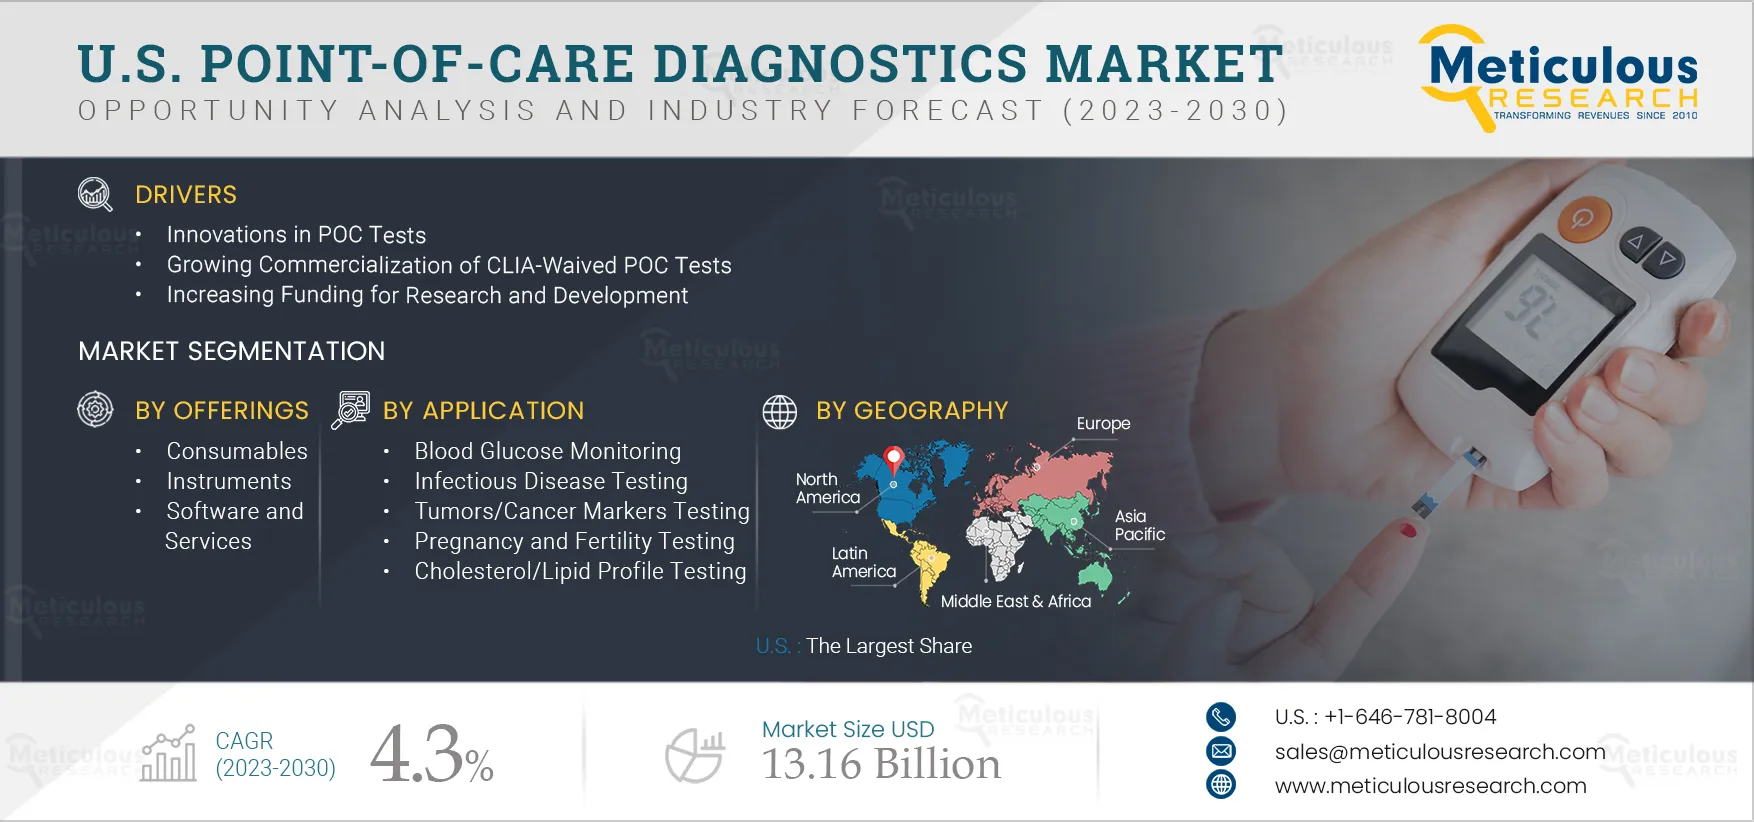 U.S. Point-of-Care Diagnostics Market 